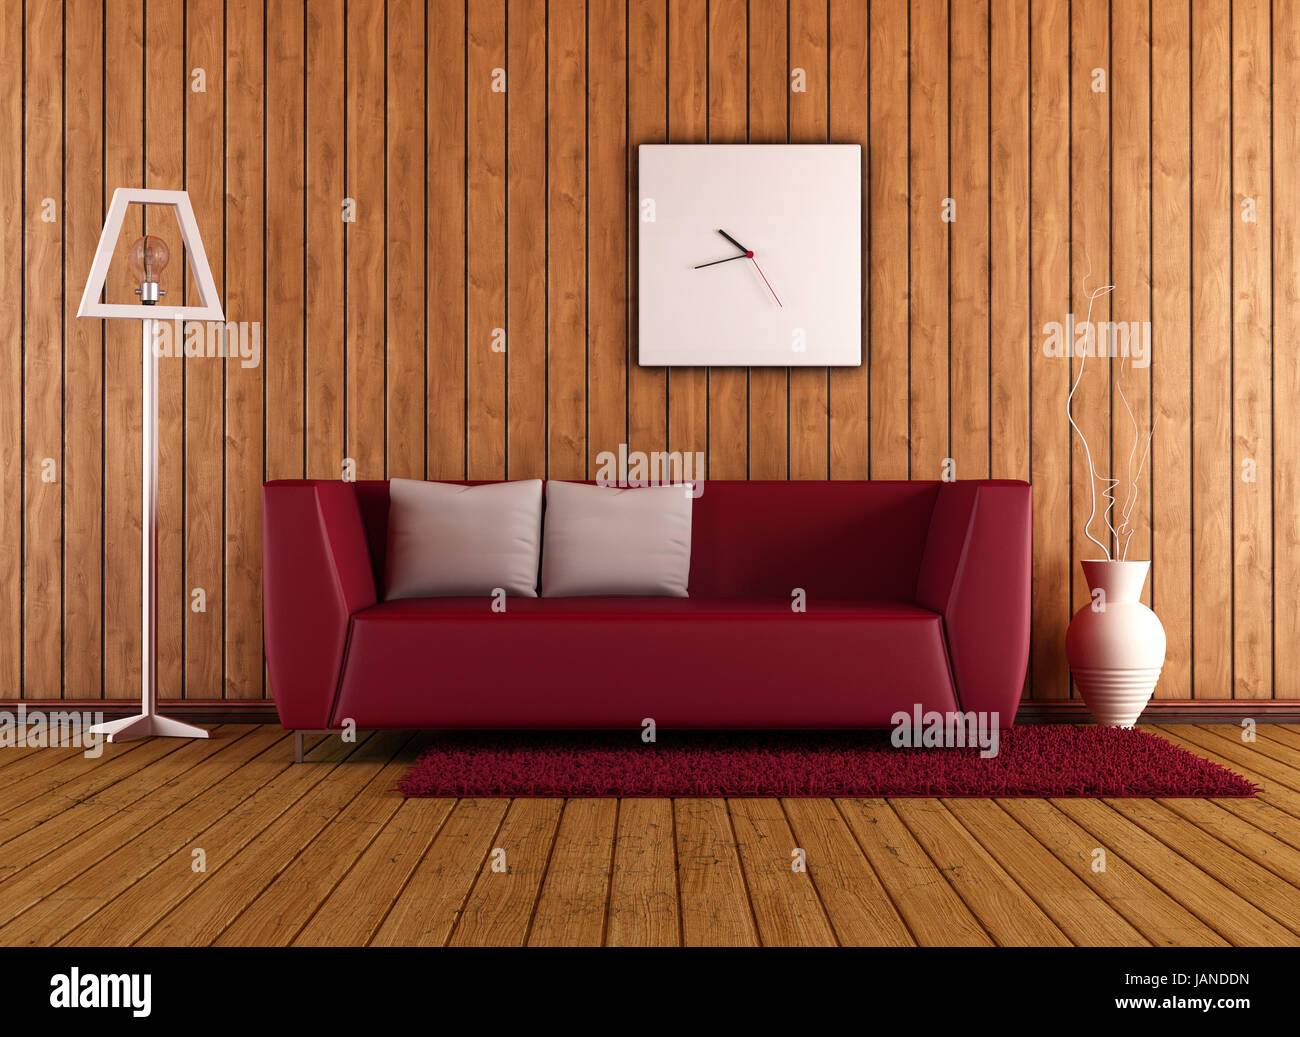 Modernes rotes Sofa in einem Raum aus Holz - Rendering Stockfotografie -  Alamy